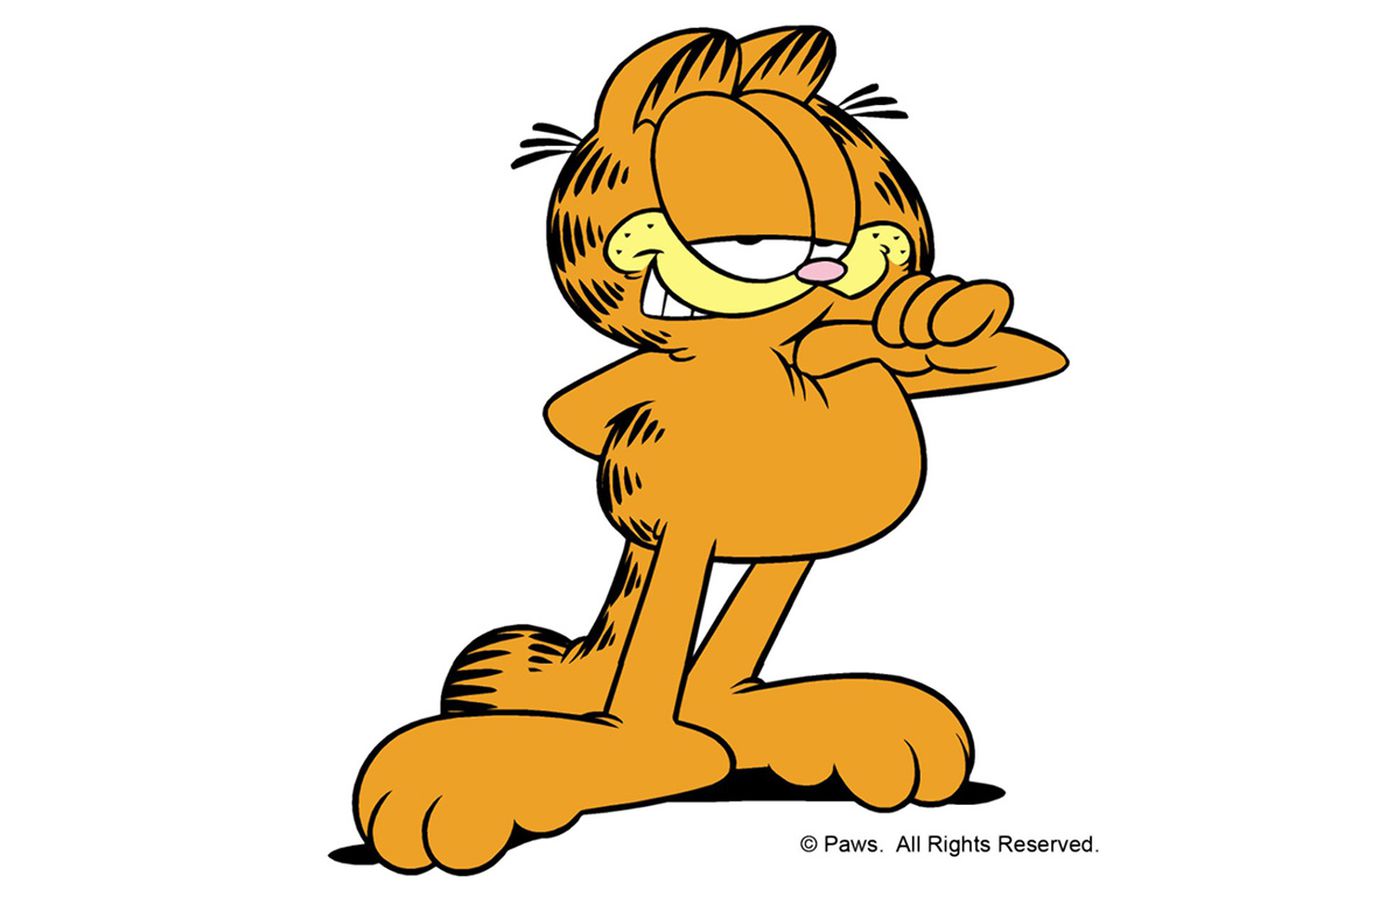 Garfield creator Jim Davis forced to clarify cartoon cat’s